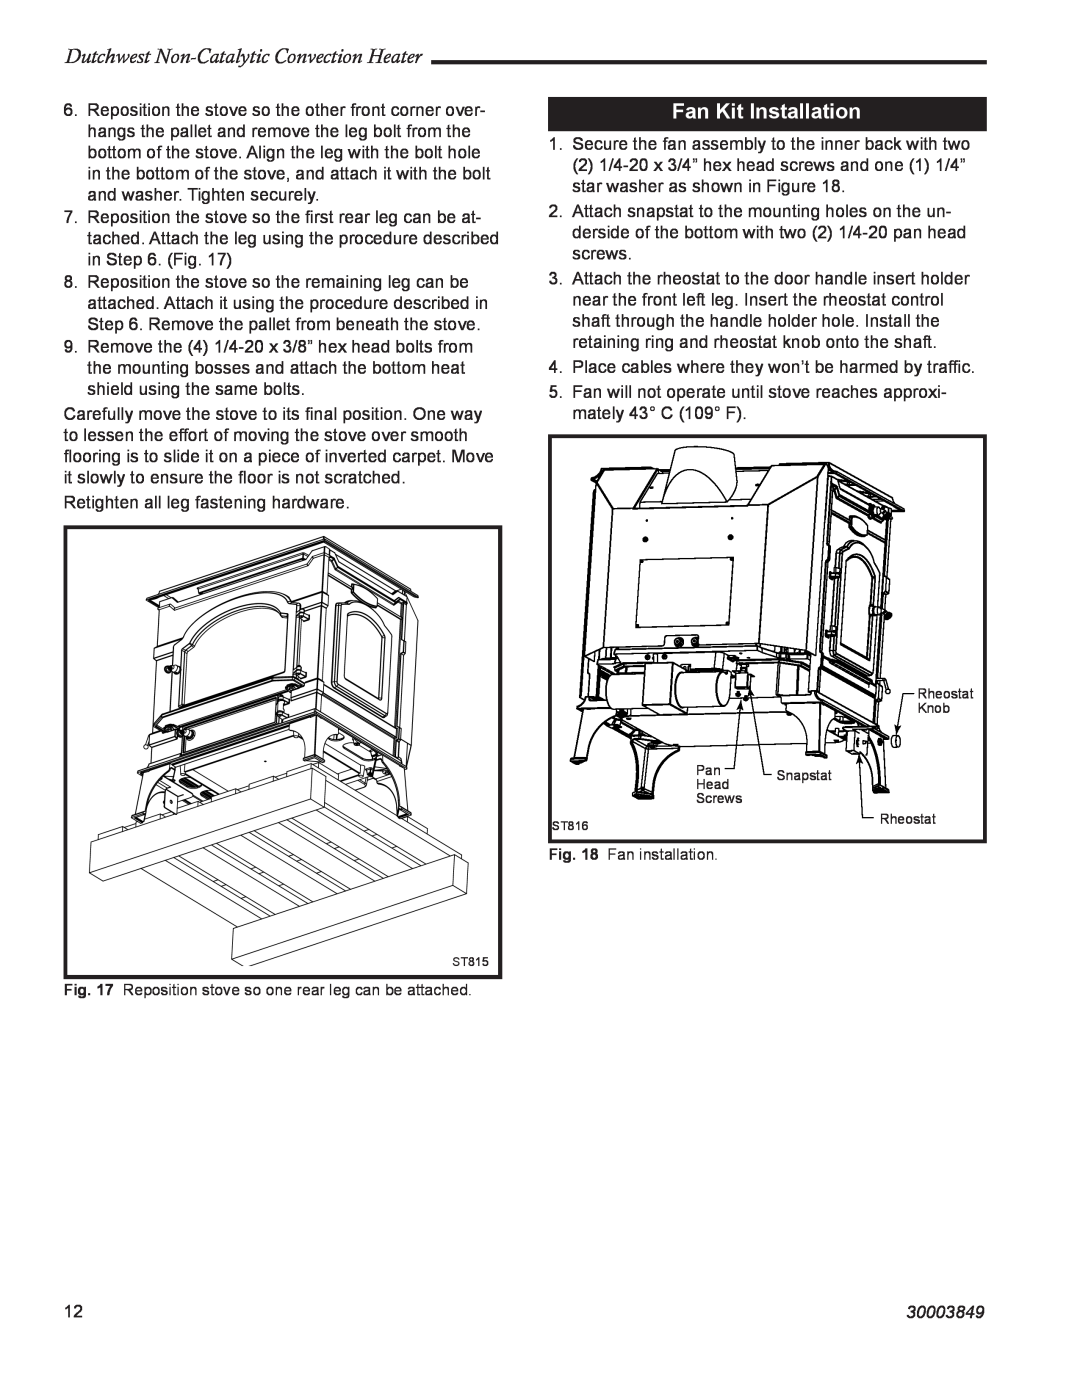 Vermont Casting 2477CE manual Fan Kit Installation, Dutchwest Non-CatalyticConvection Heater, 30003849 